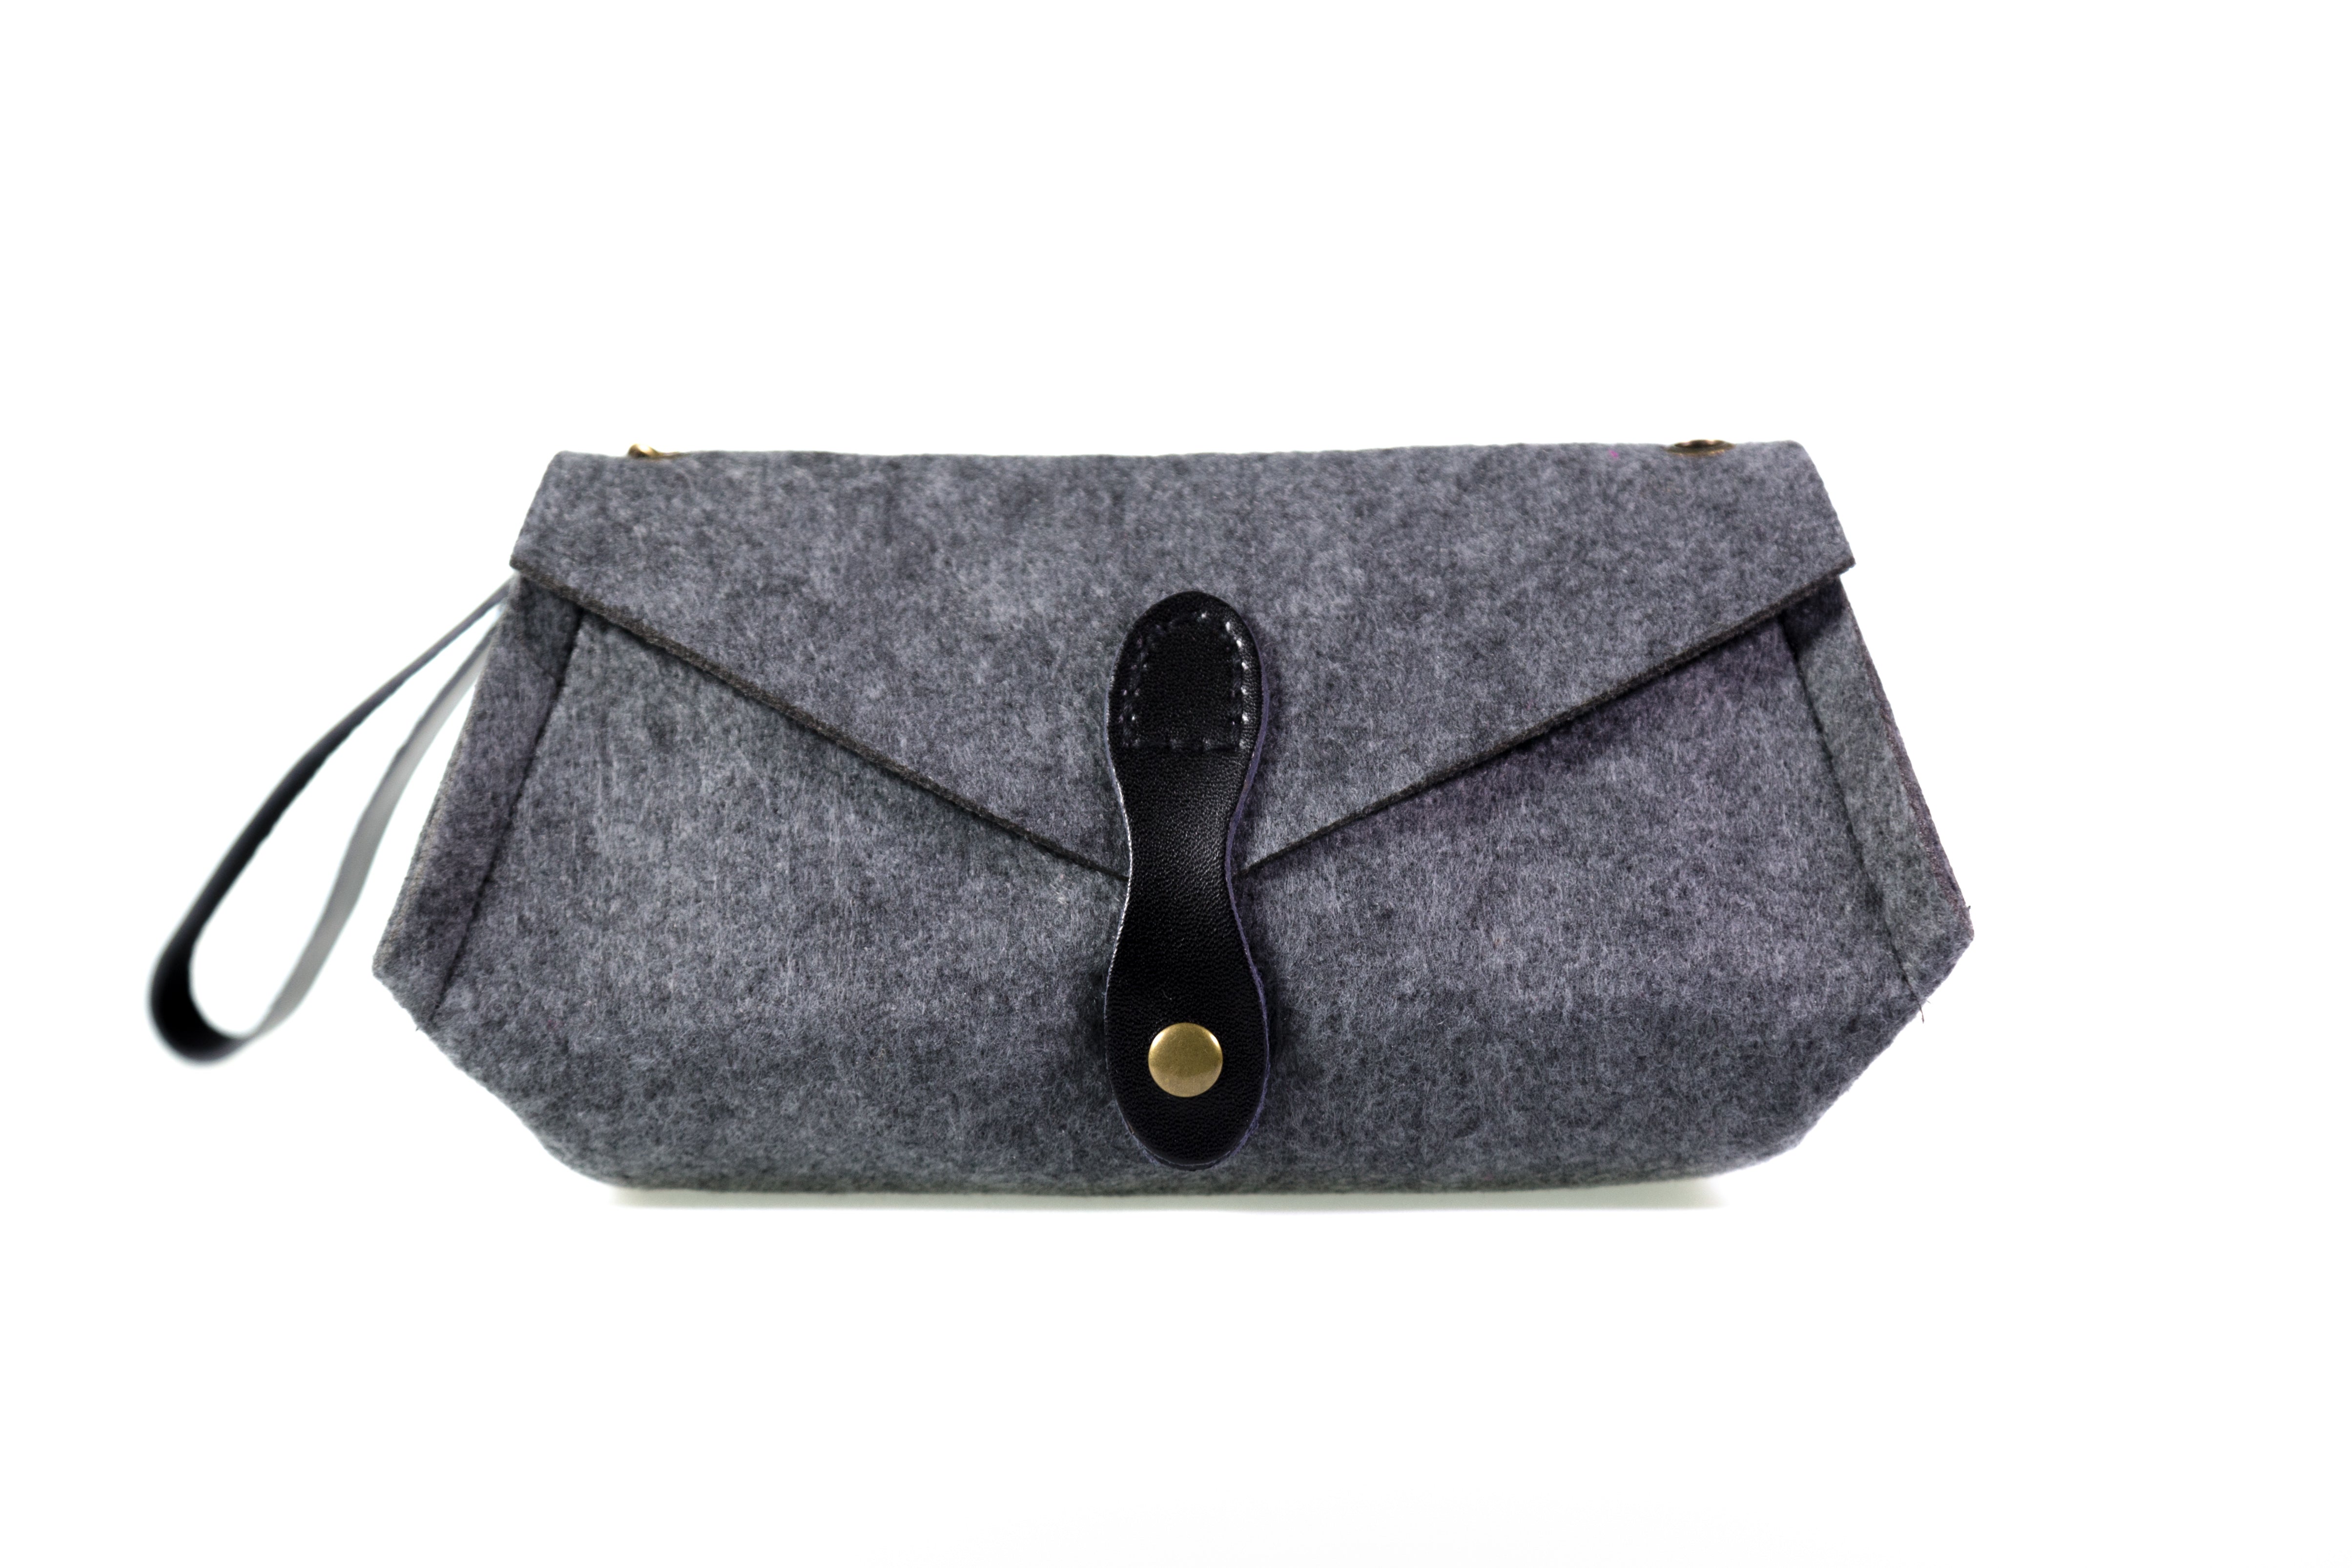 Bijoux Terner Black Satin Chrome Ball Clasp Small Evening Bag Convertible  Clutch | Evening bags, Chrome ball, Black satin